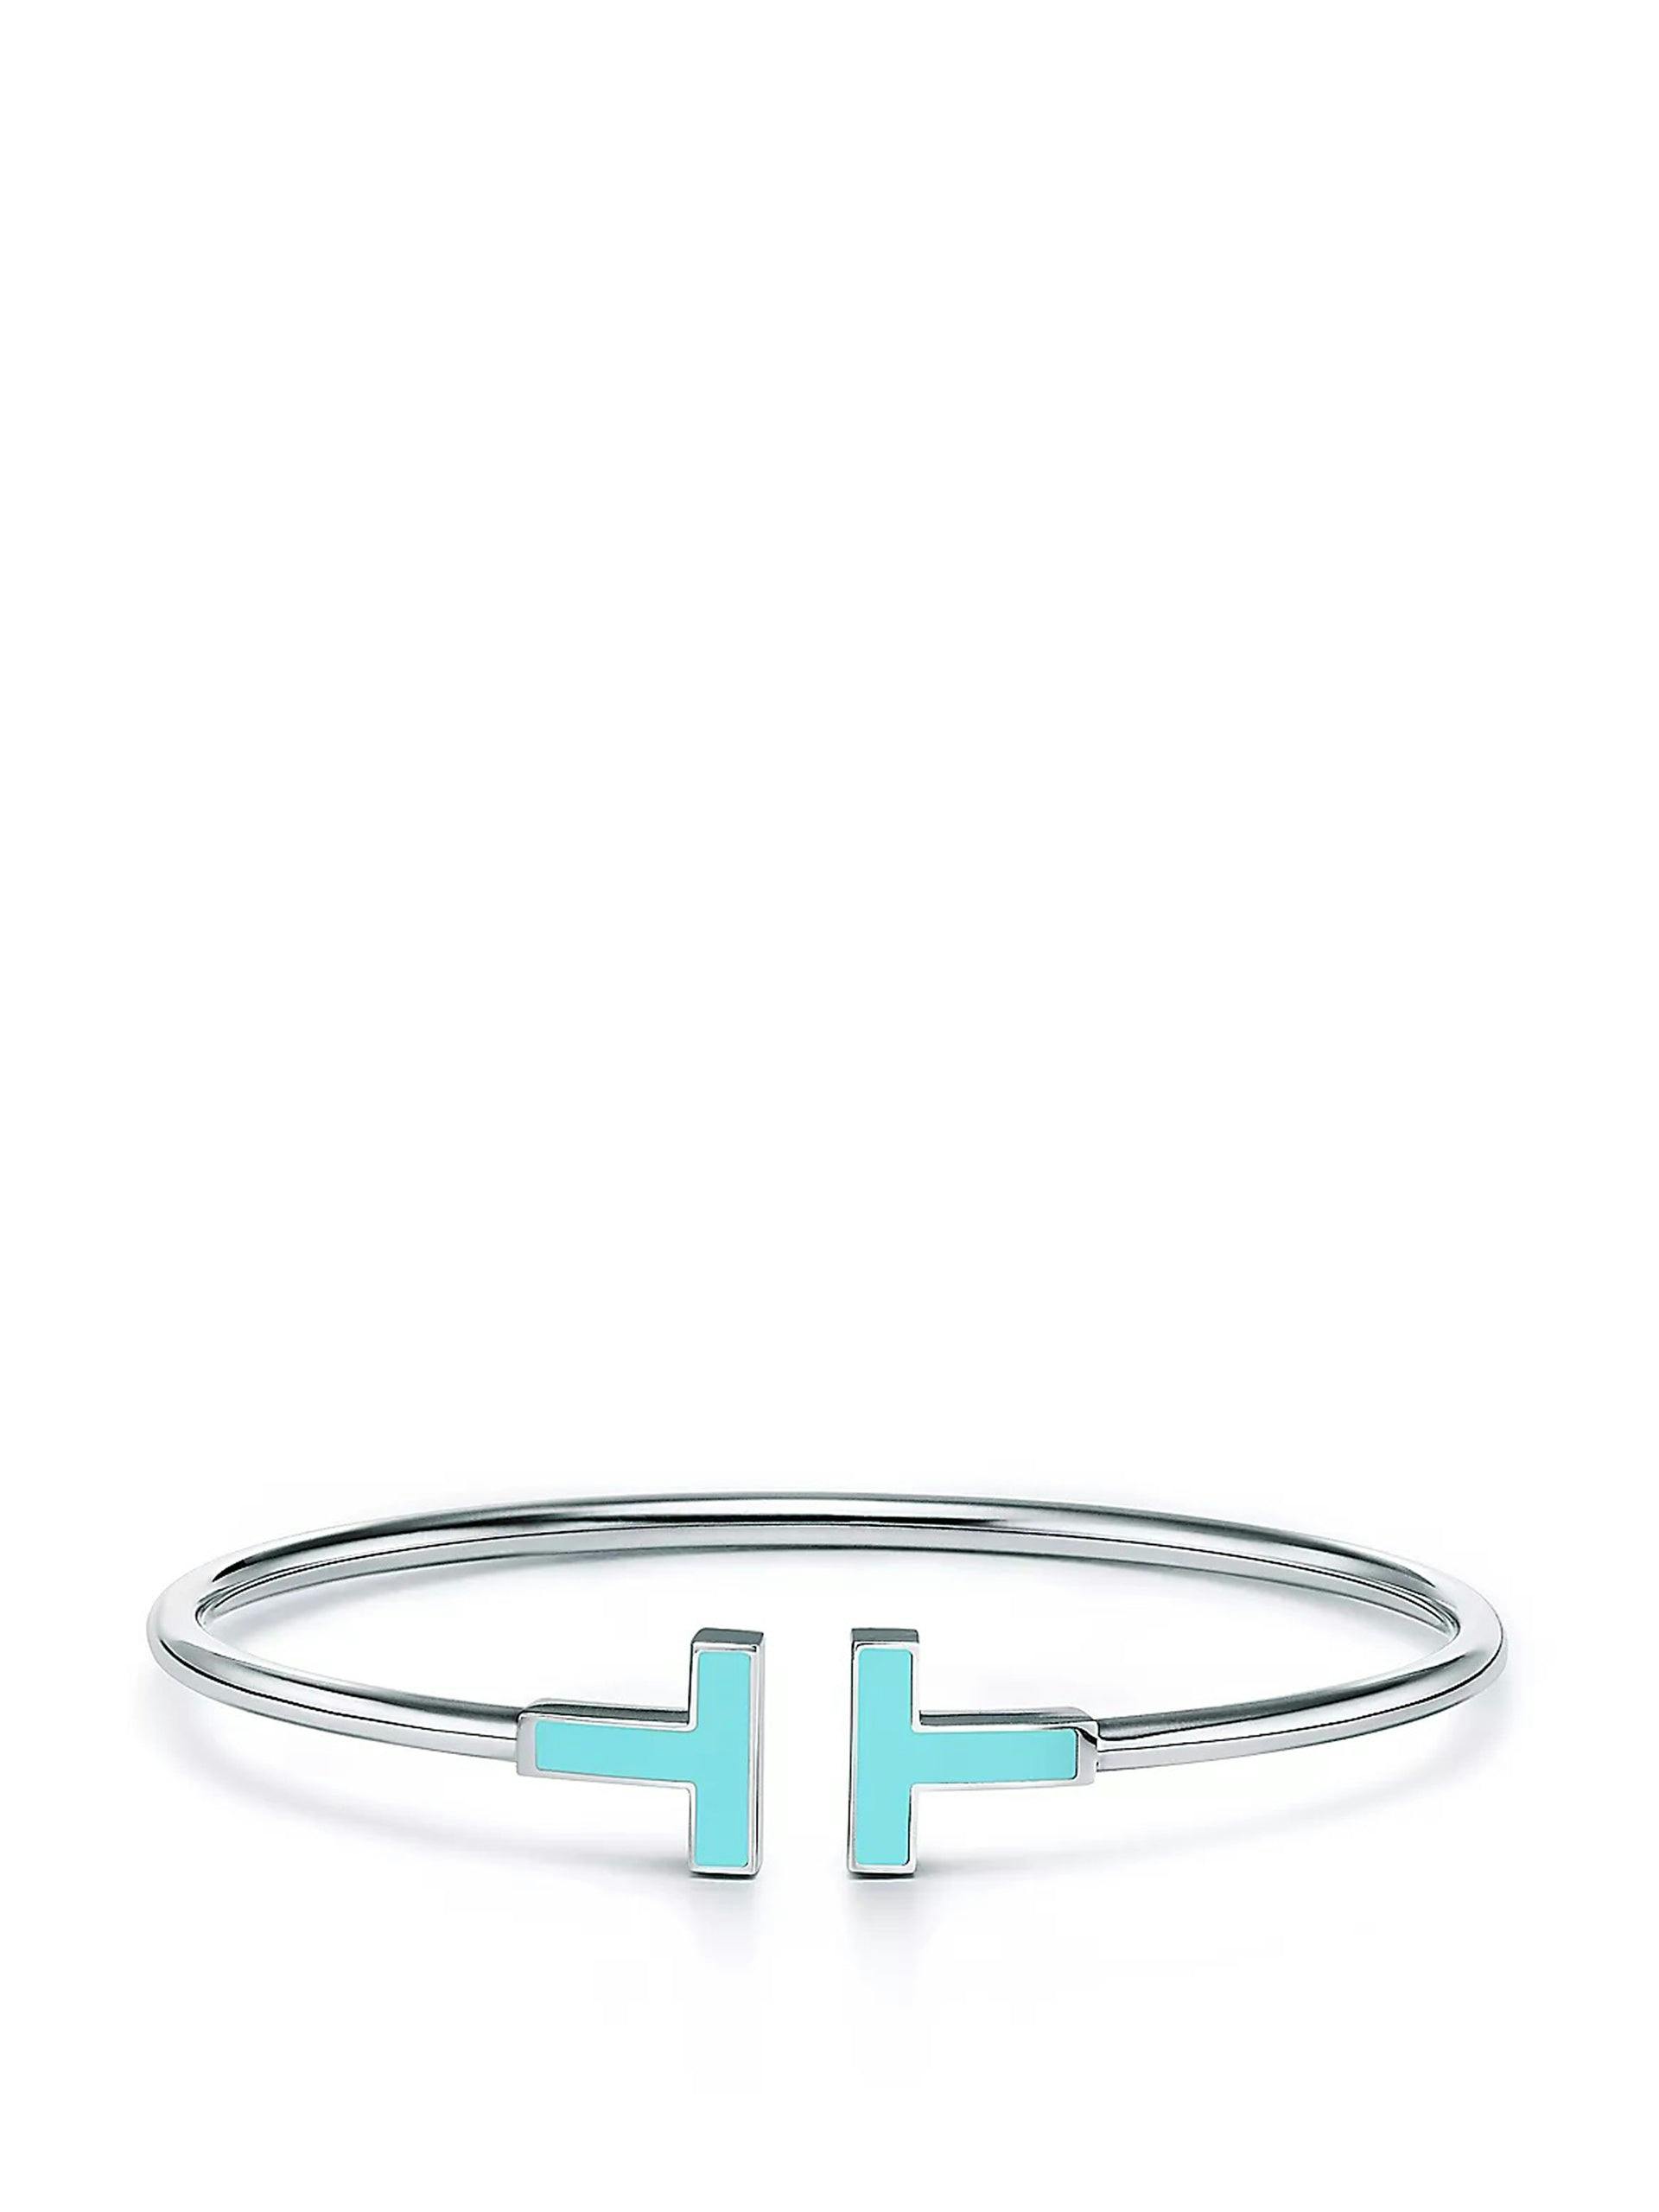 Turquoise wire bracelet